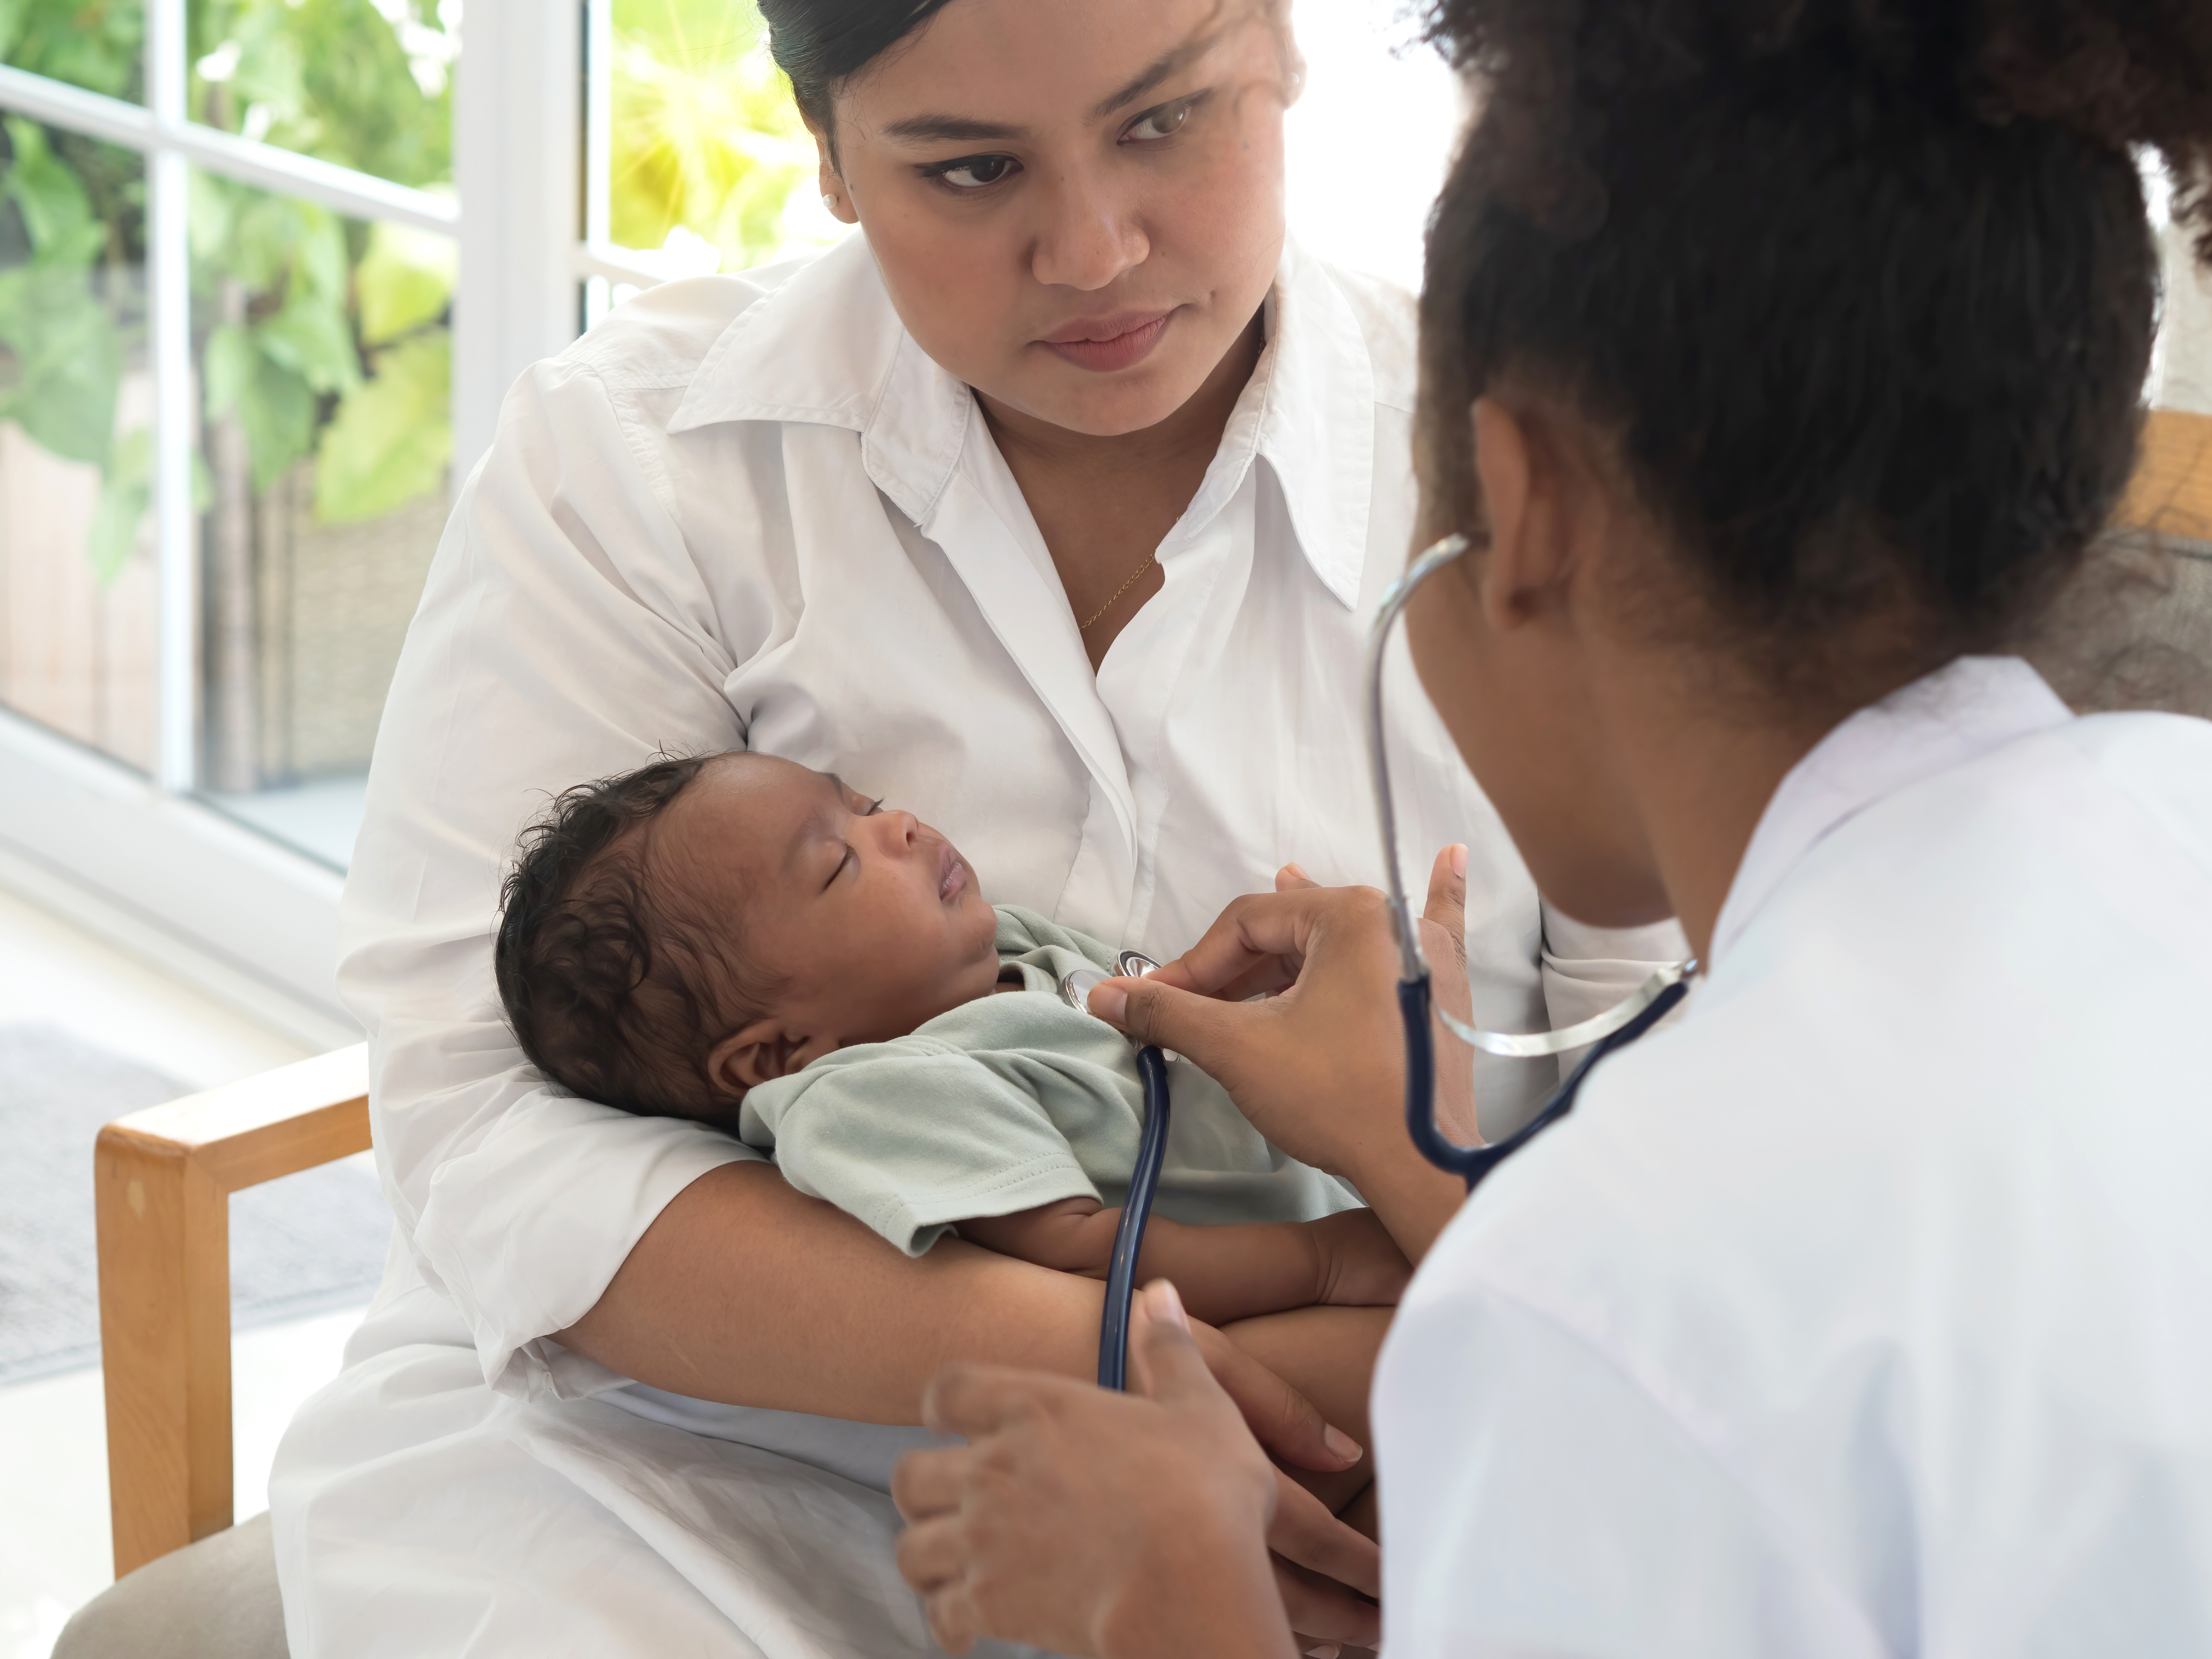 Nurse checks baby's heartbeat with a stethoscope.